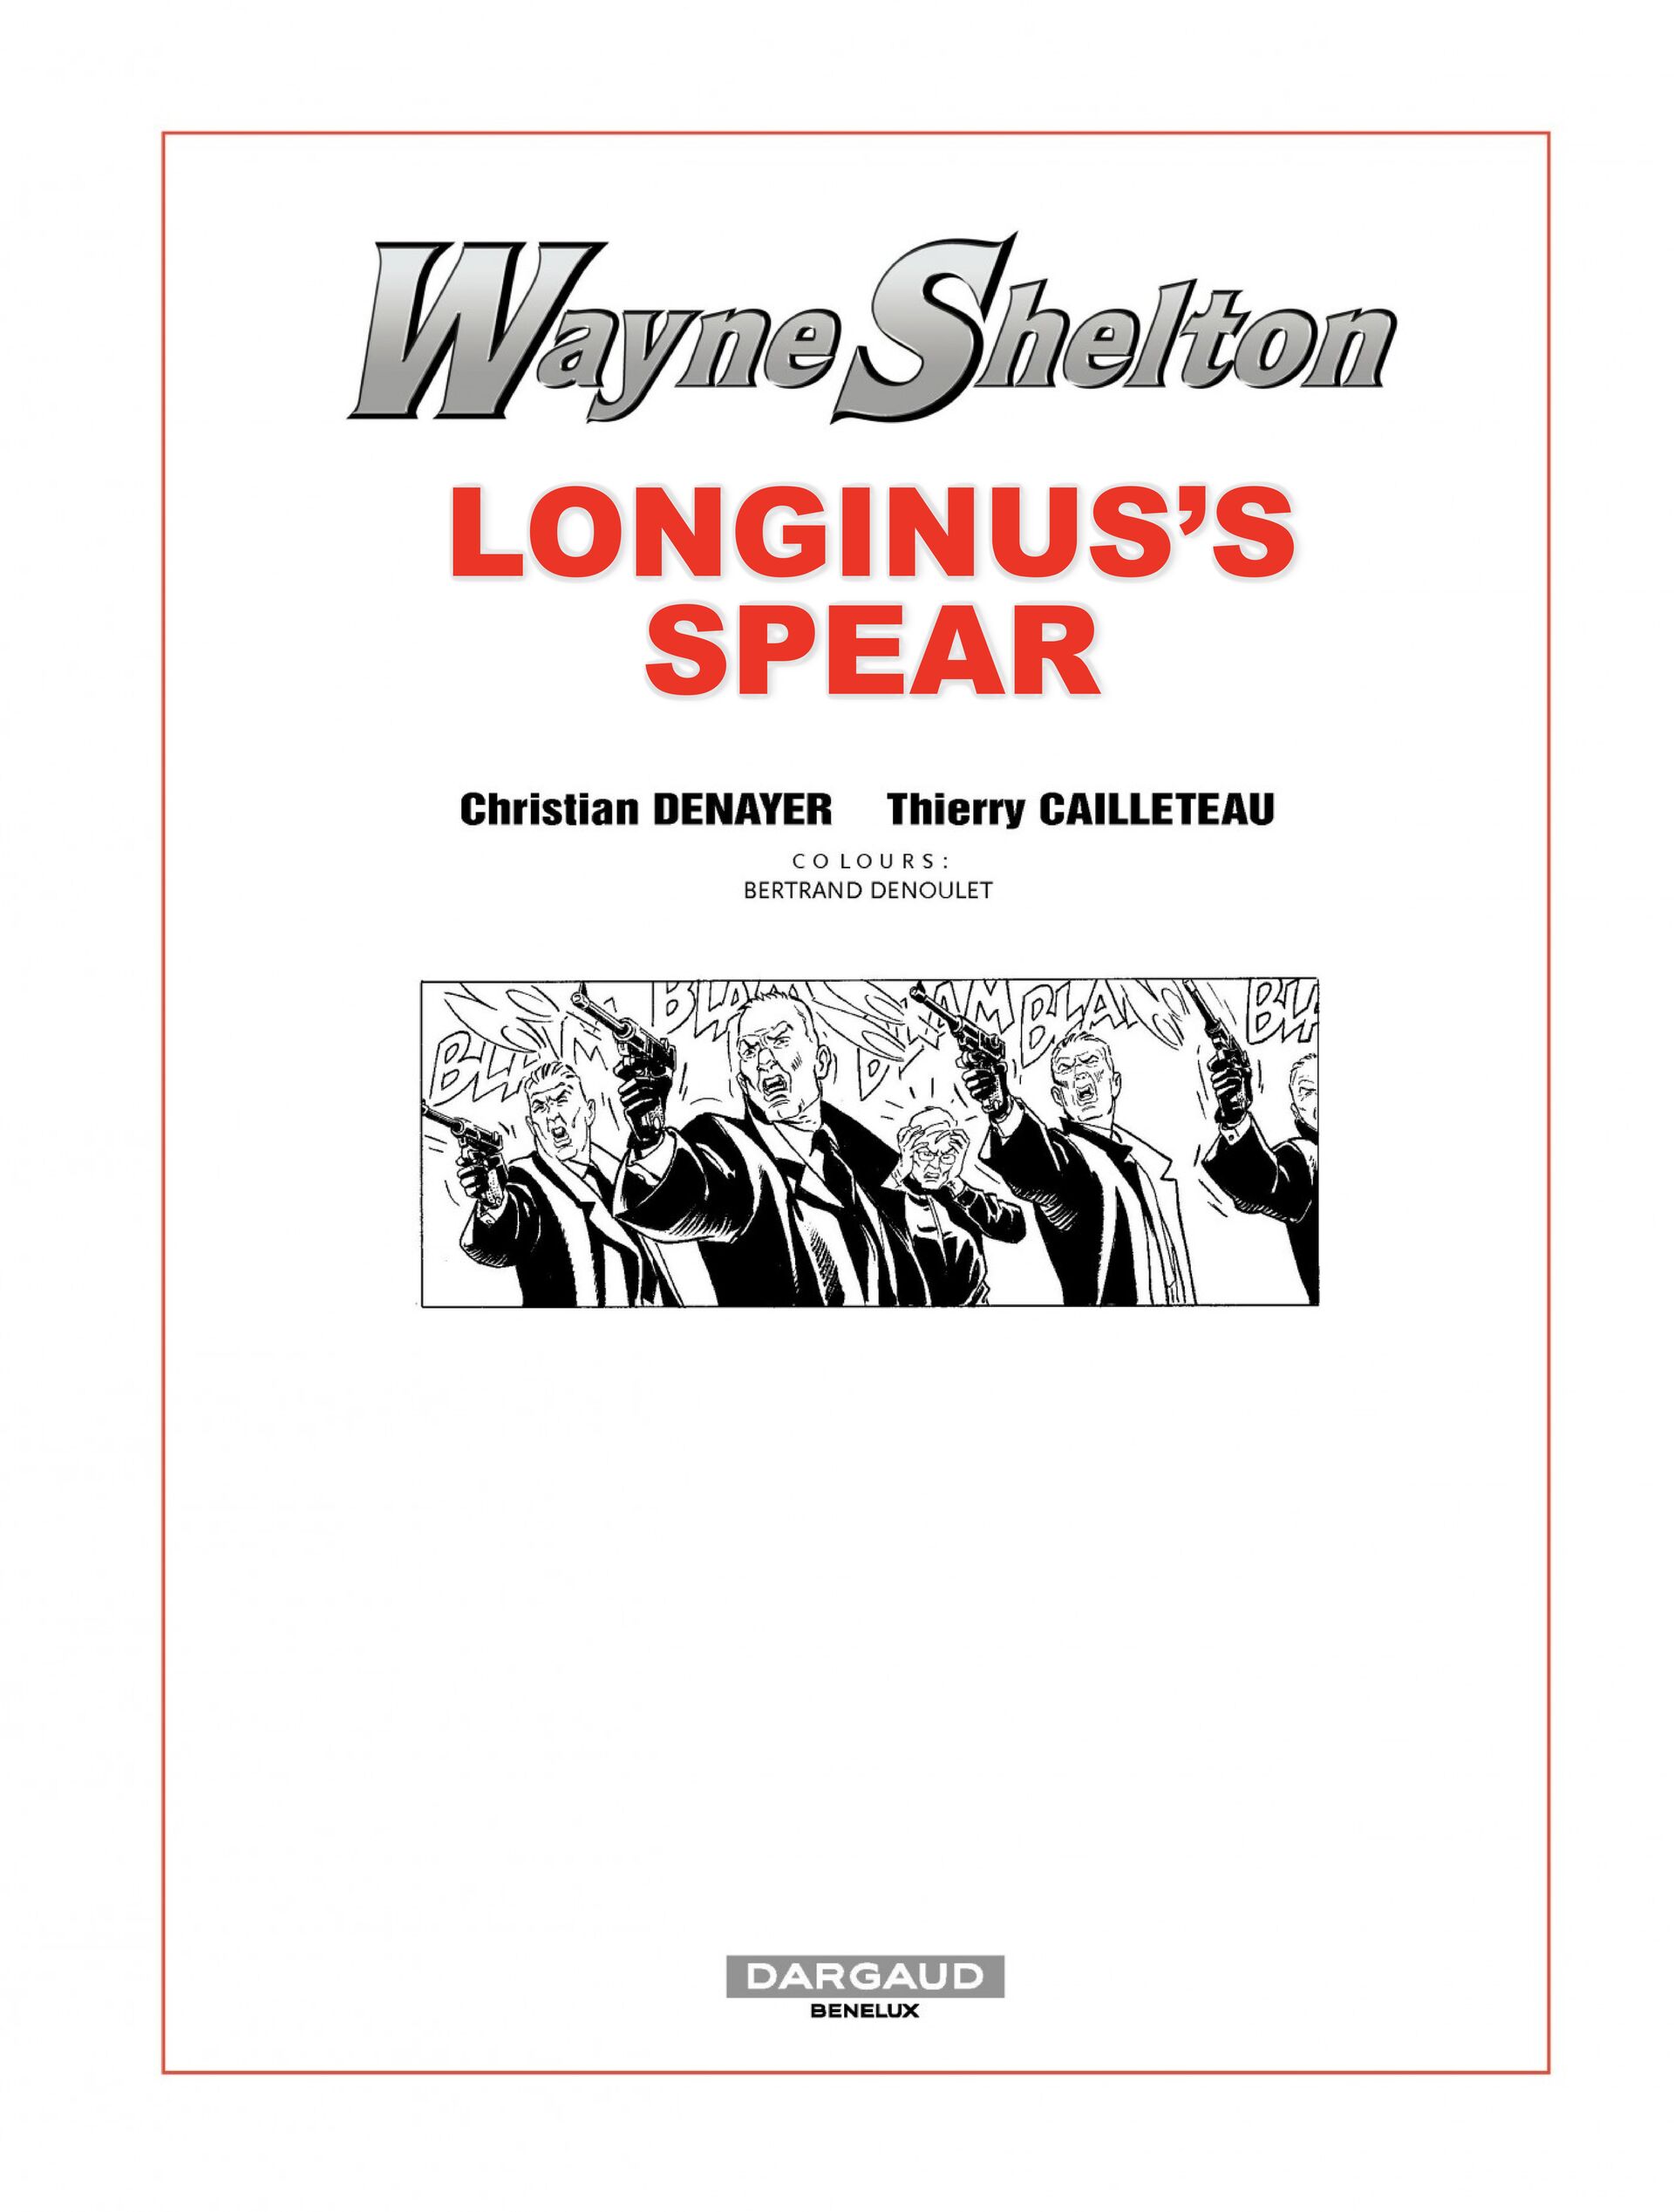 Read online Wayne Shelton comic -  Issue #7 - 2